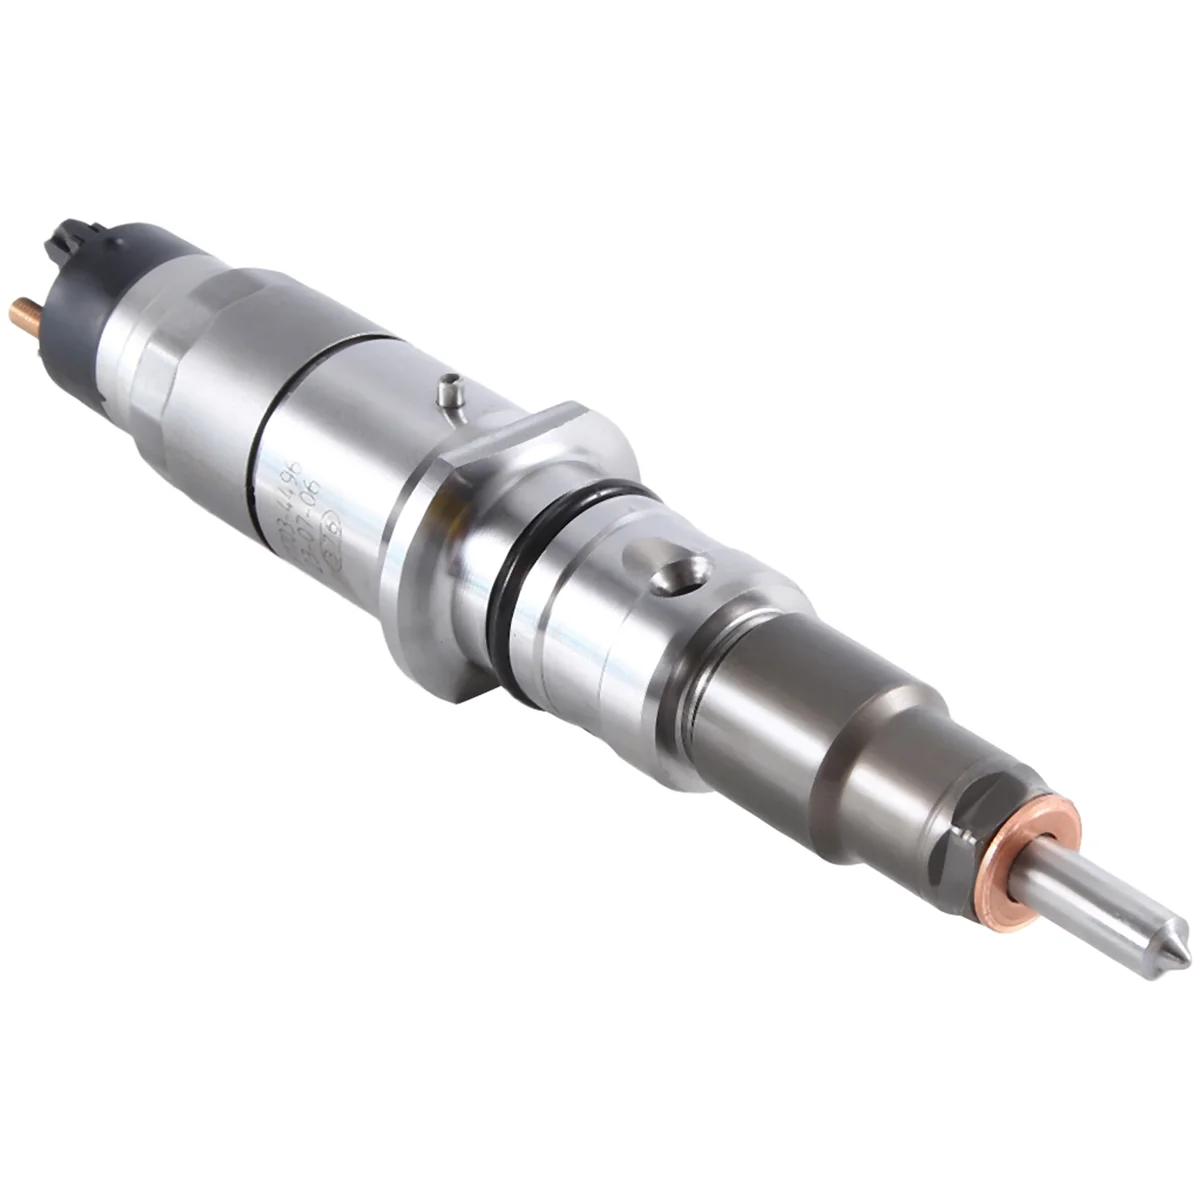 

0445120250 New Diesel Fuel Injector Nozzle for Cummins LSBE DAF CF65 LF45 LF55